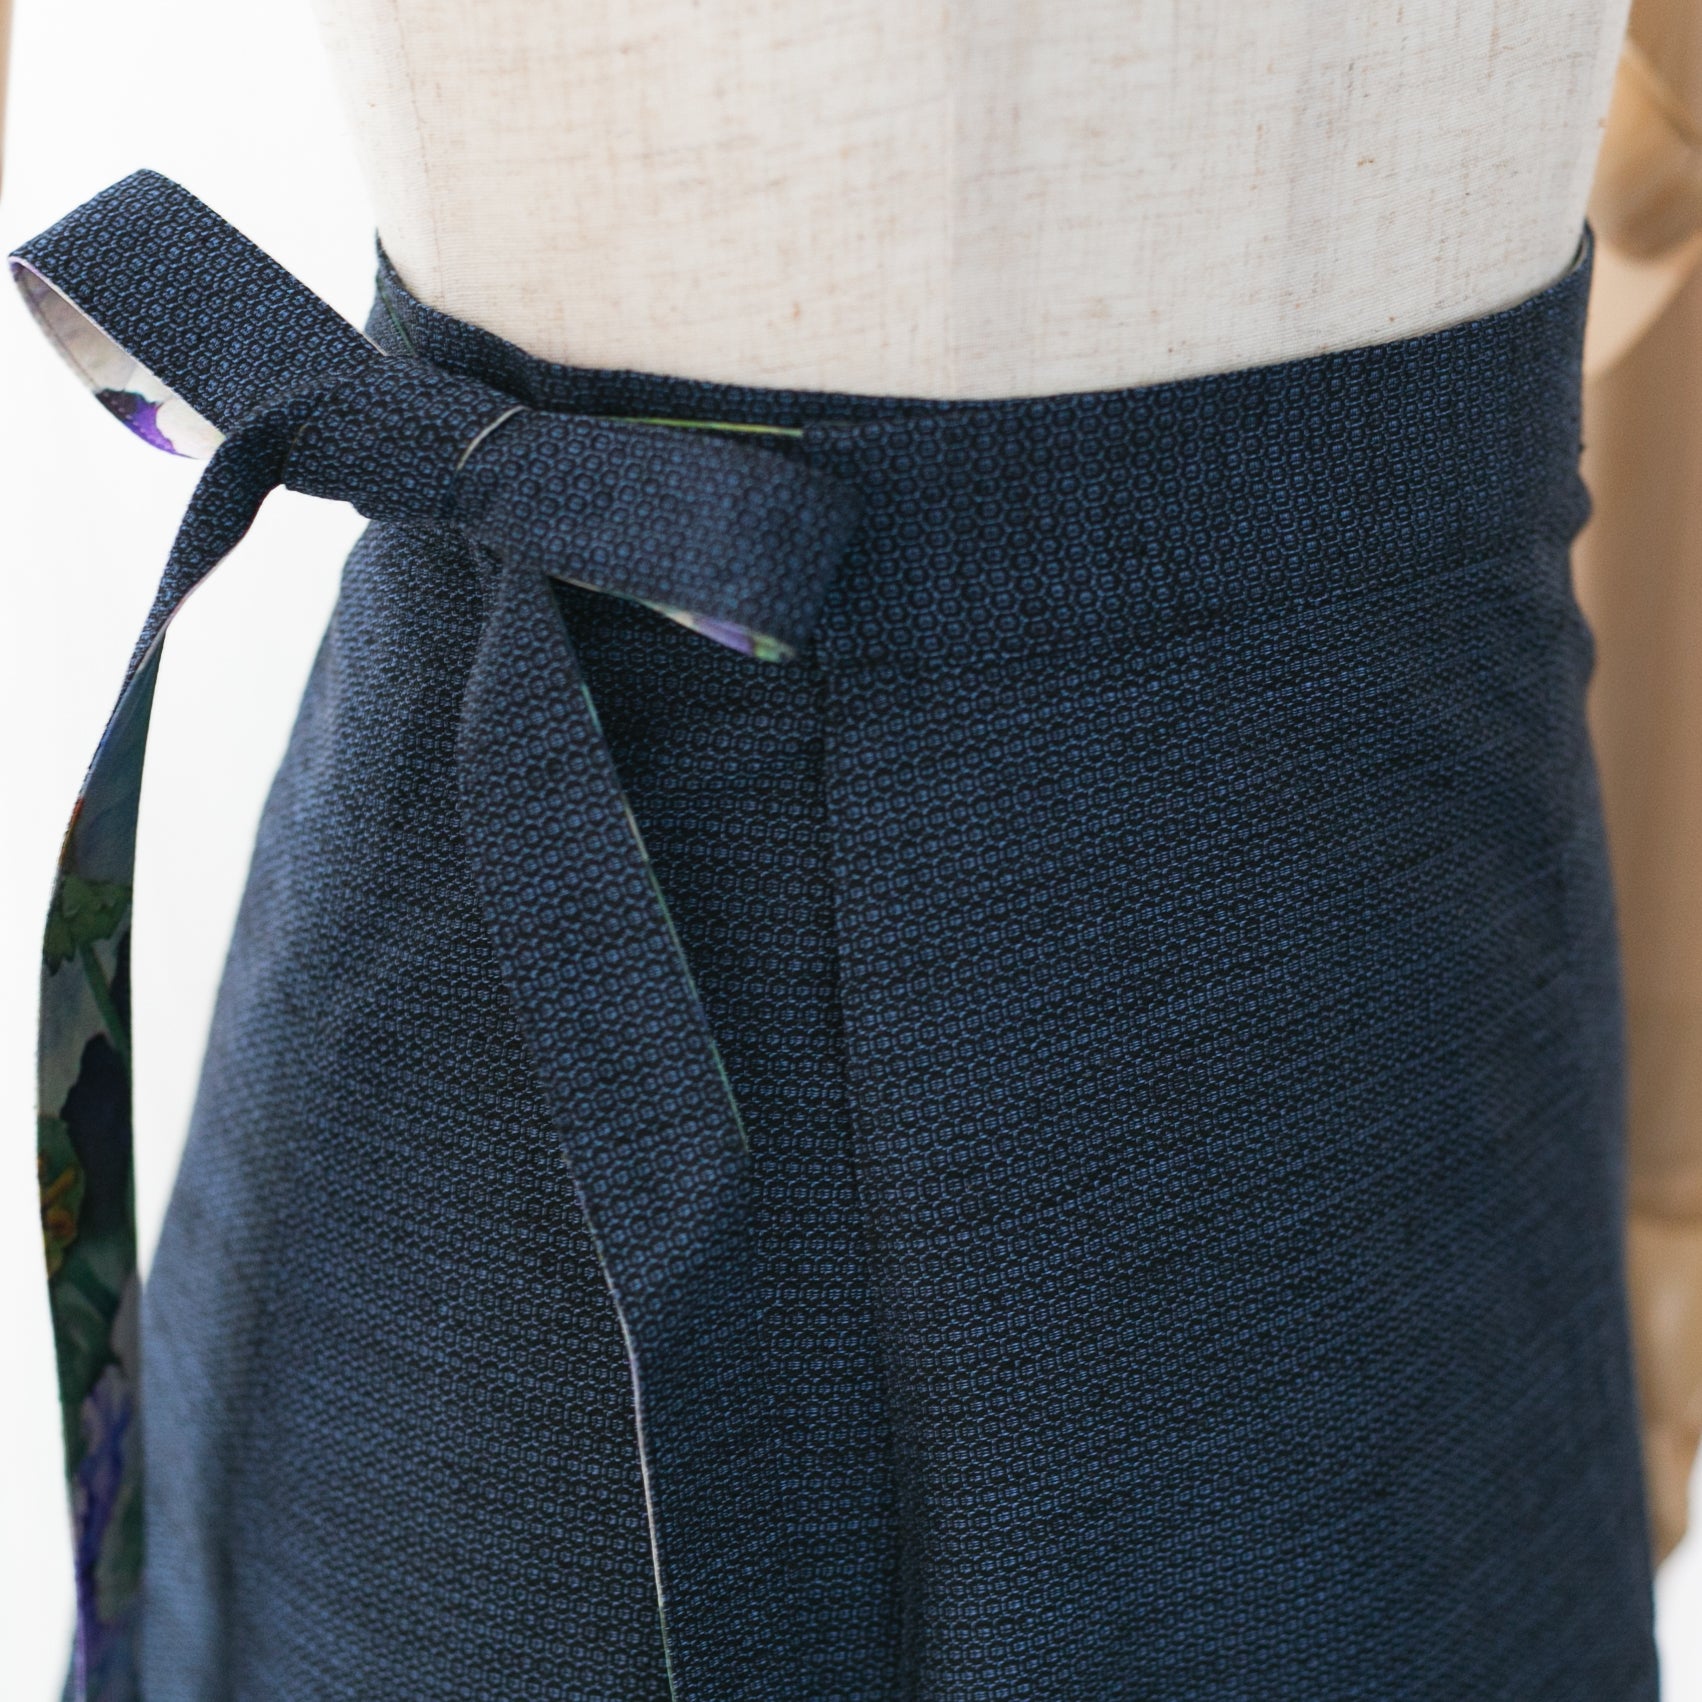 Reversible Skirt Flare - Fiori Blu